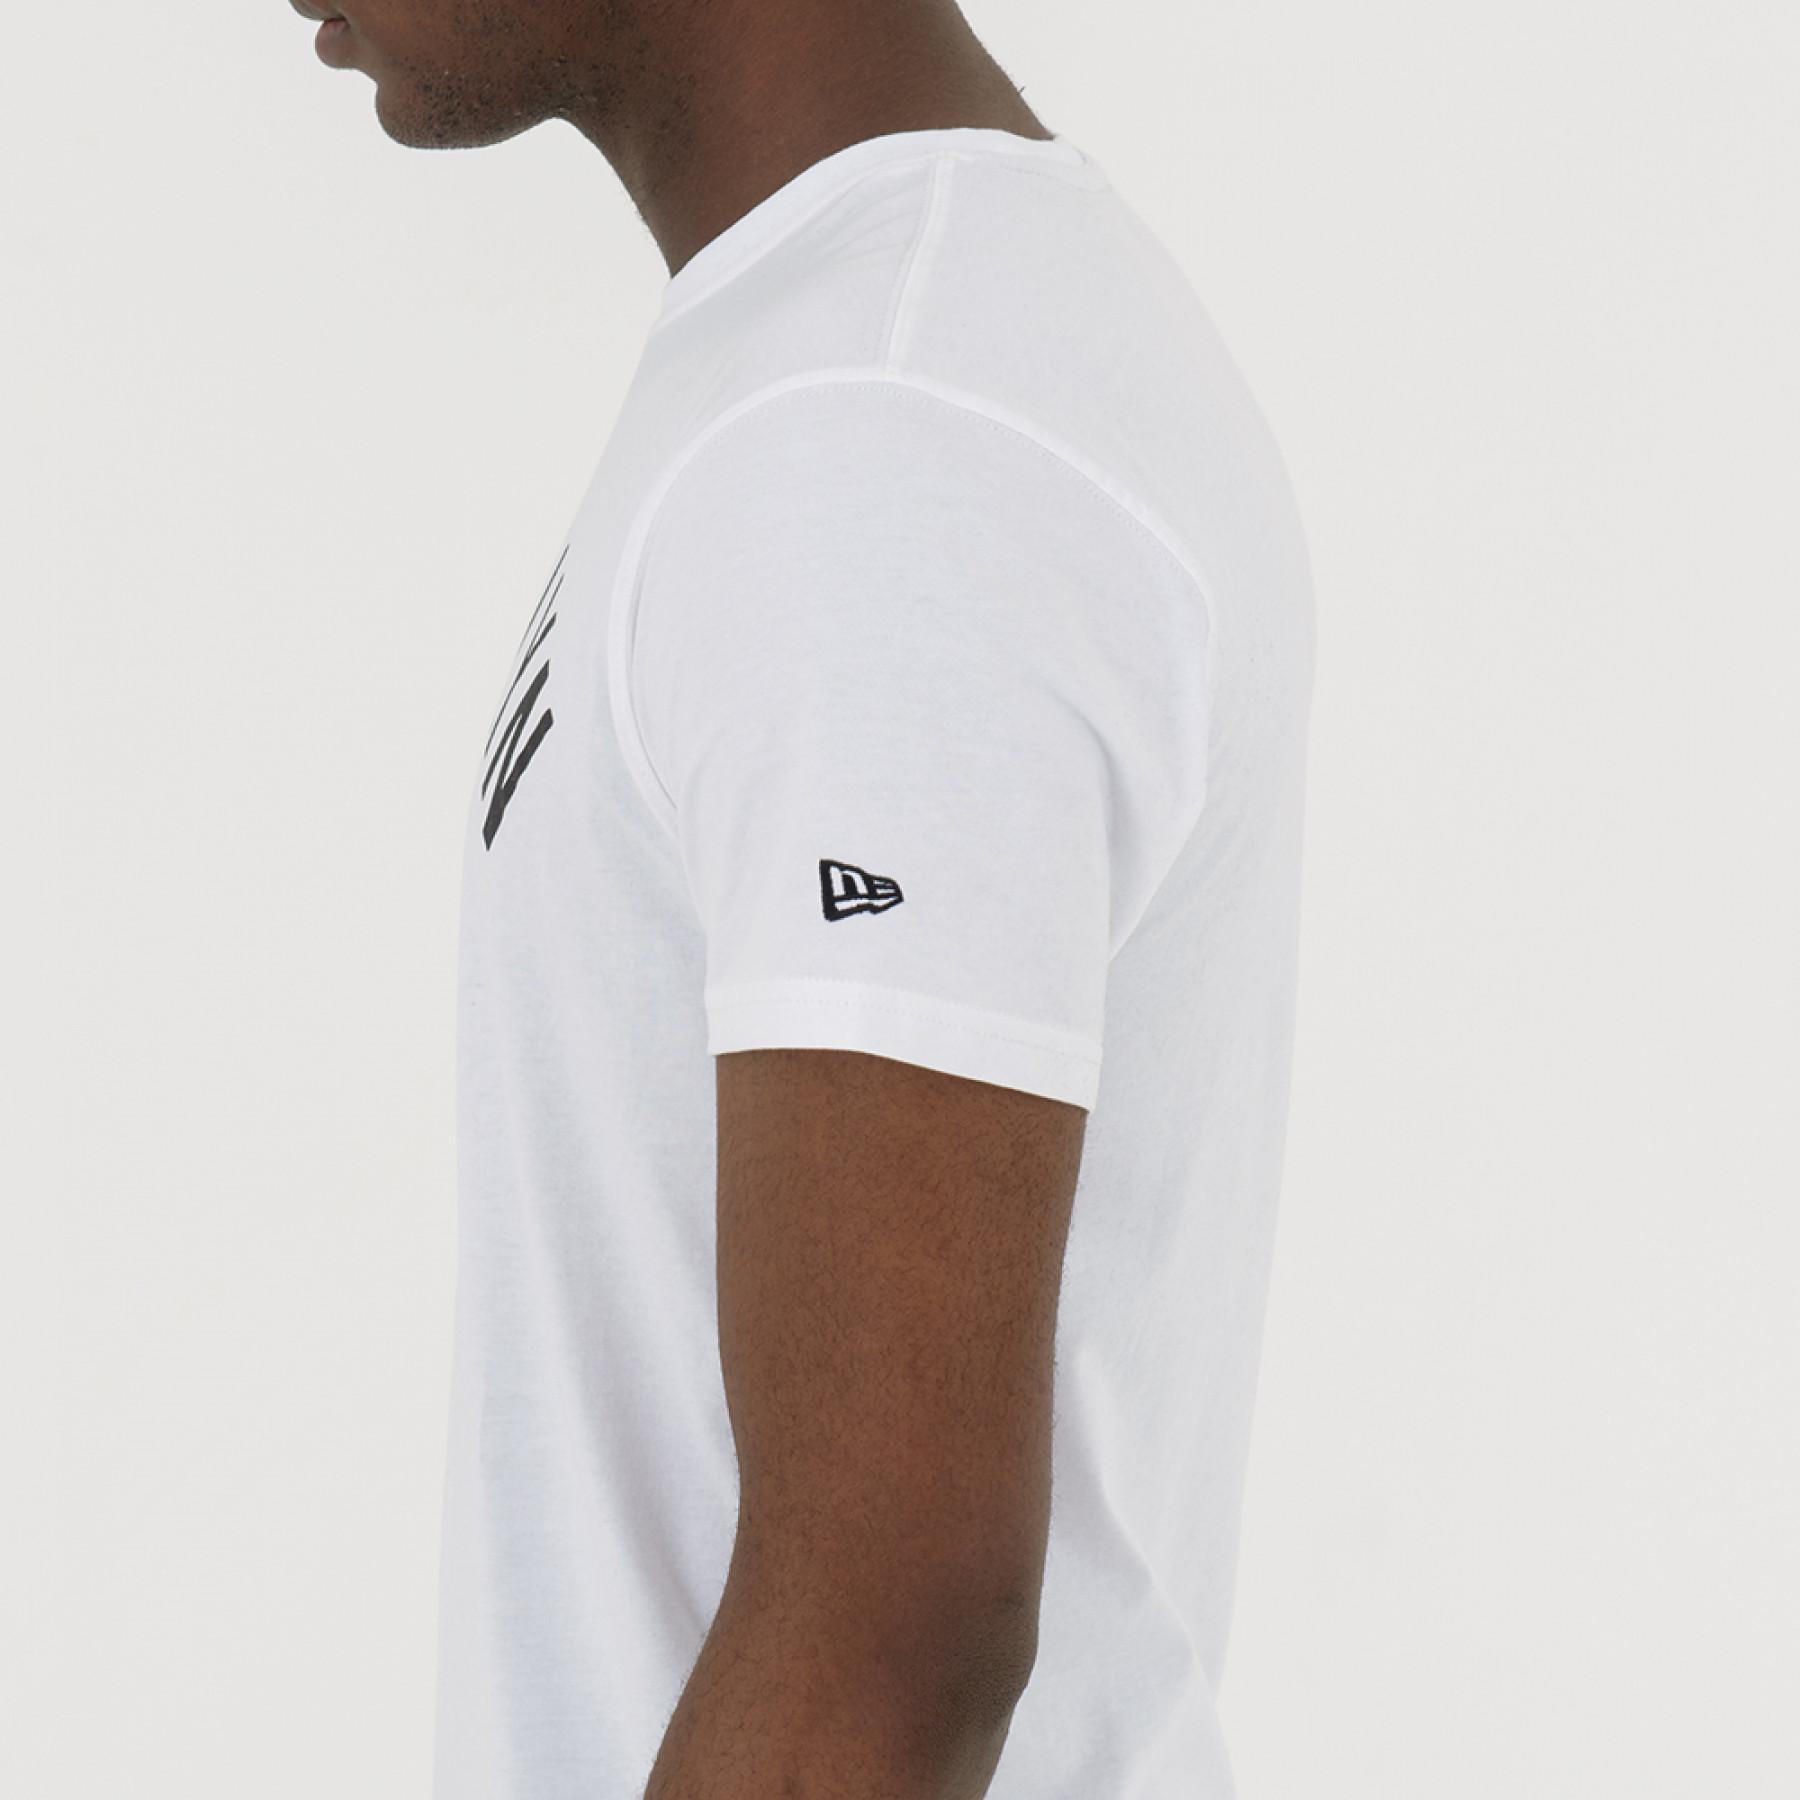 White T-shirt Brooklyn Nets